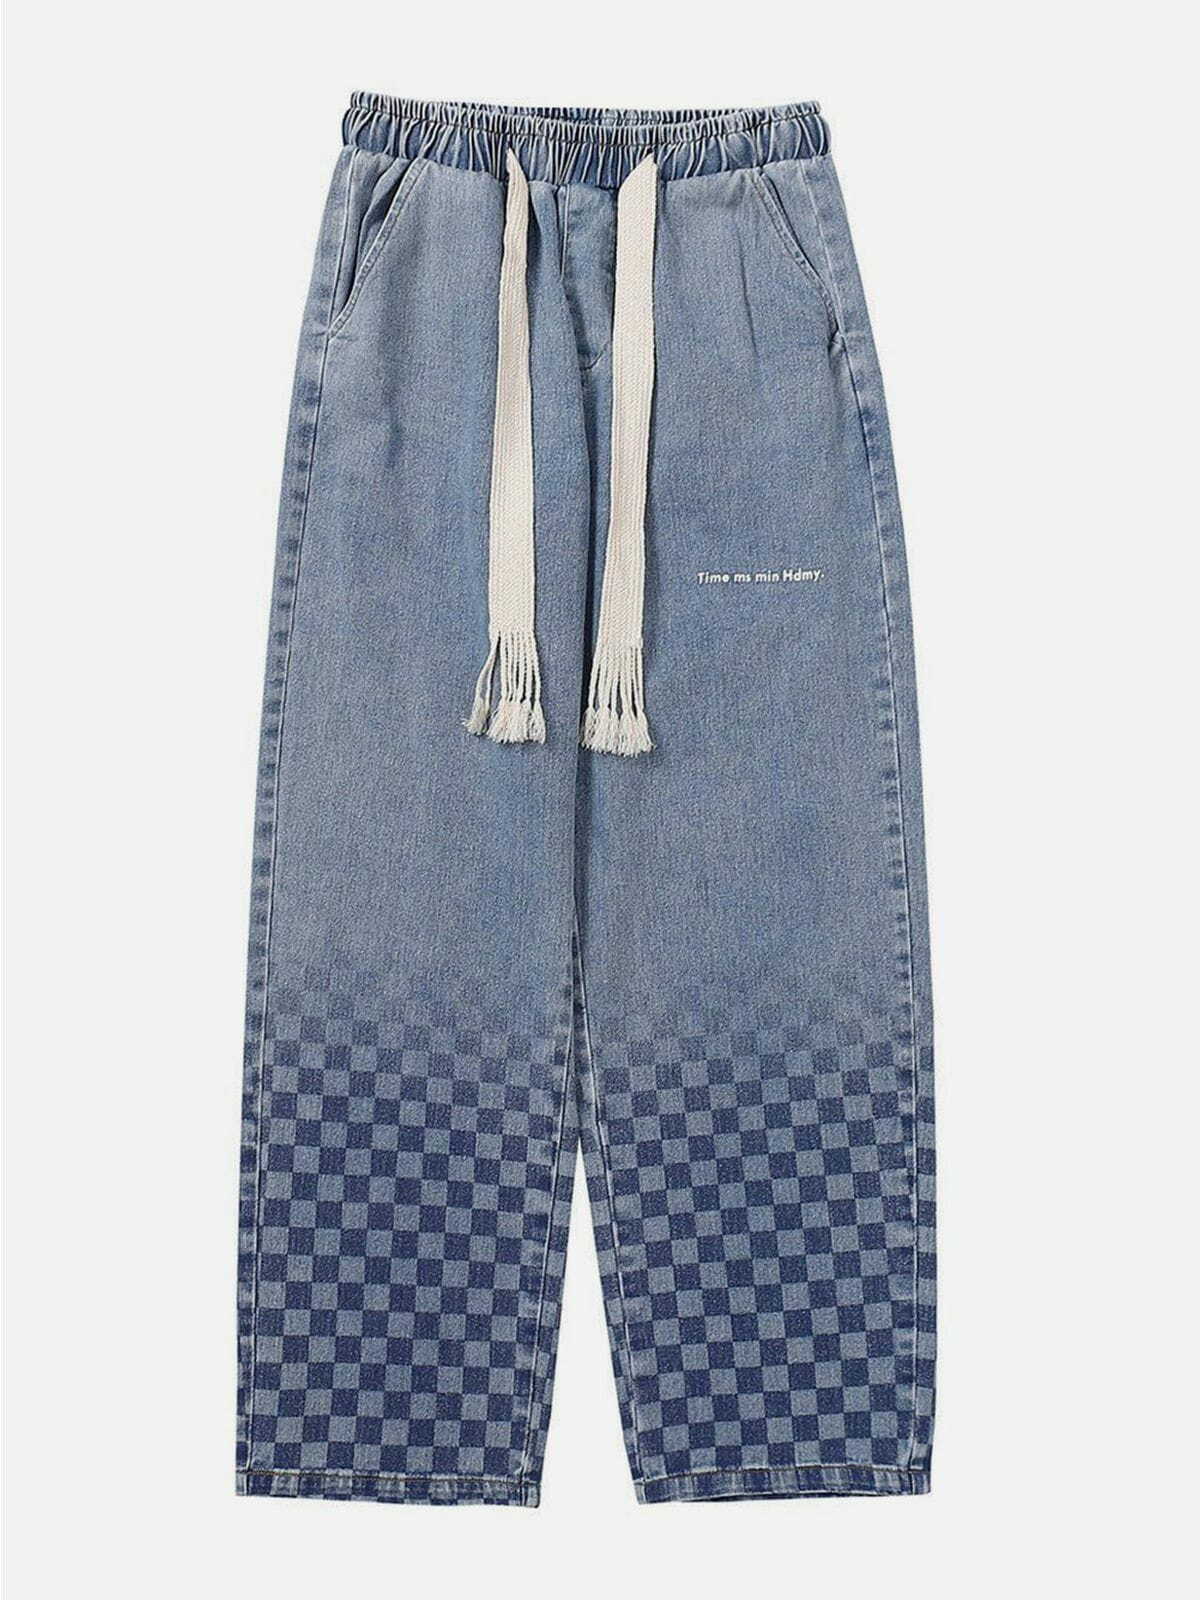 retro checkerboard print jeans edgy & vibrant streetwear 4542